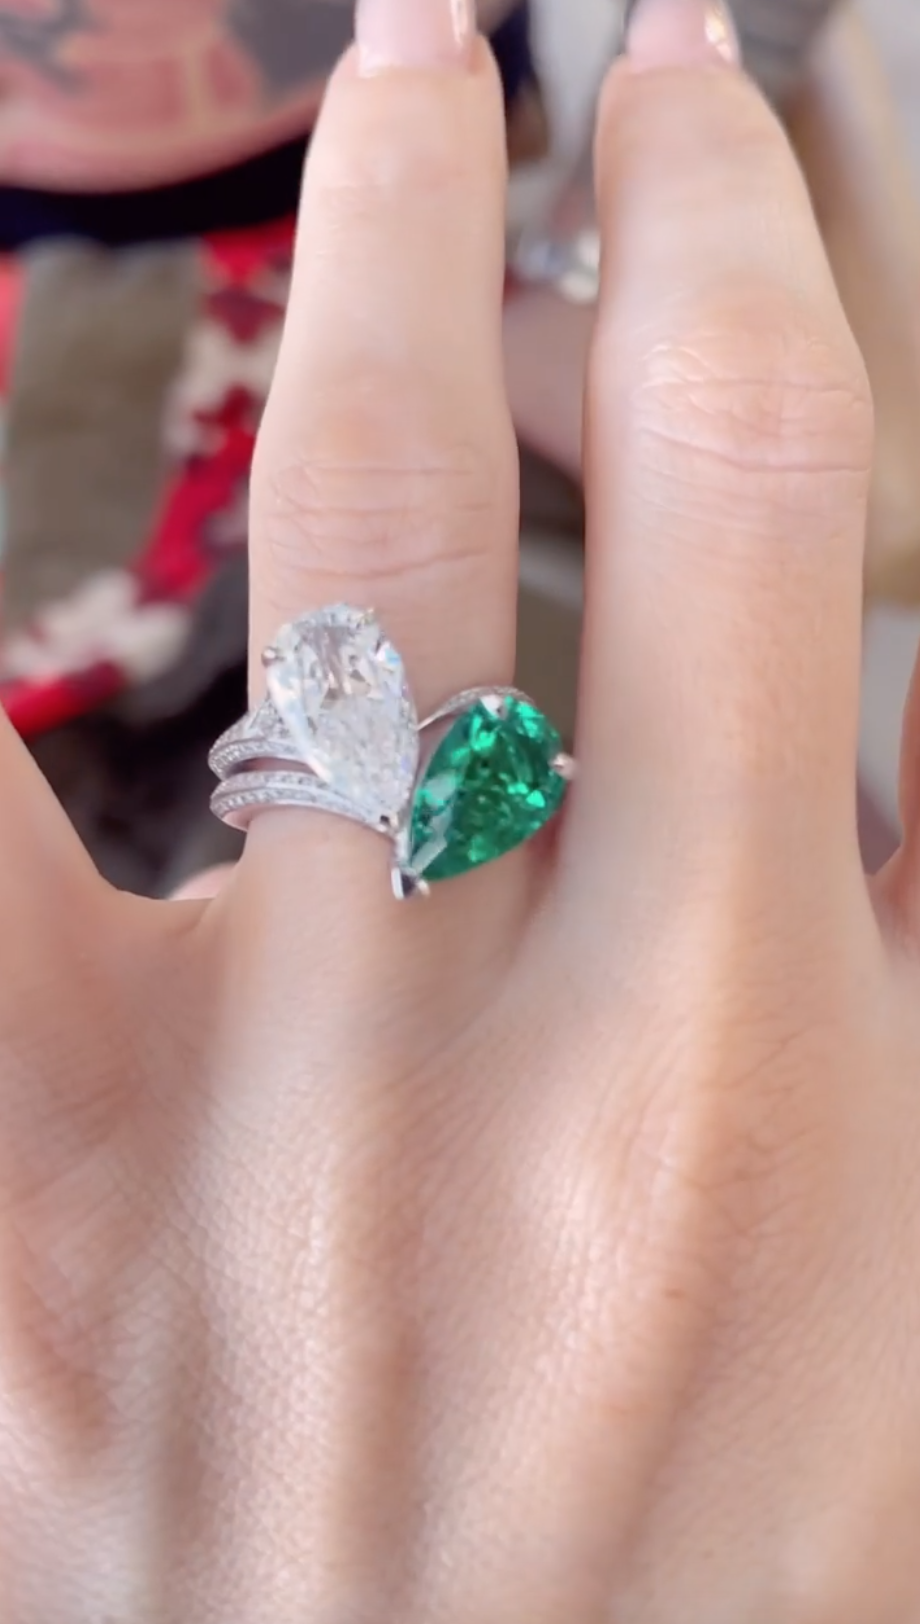 The Most Unique Celebrity Engagement Rings [PHOTOS]